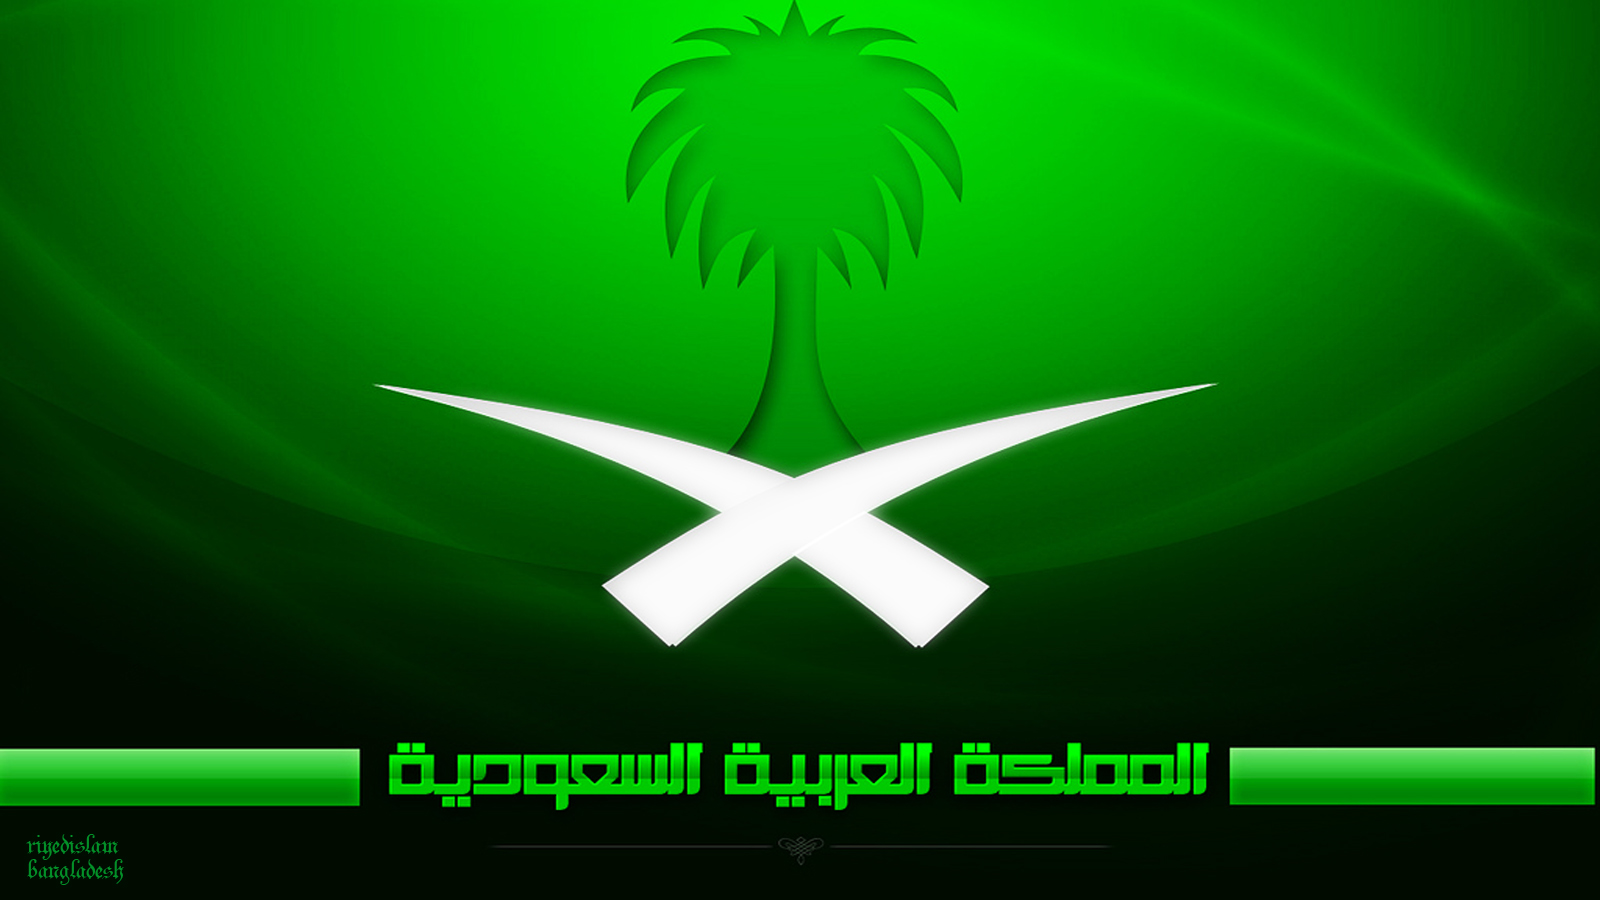 HD Wallpaper Saudi Arabia For Background